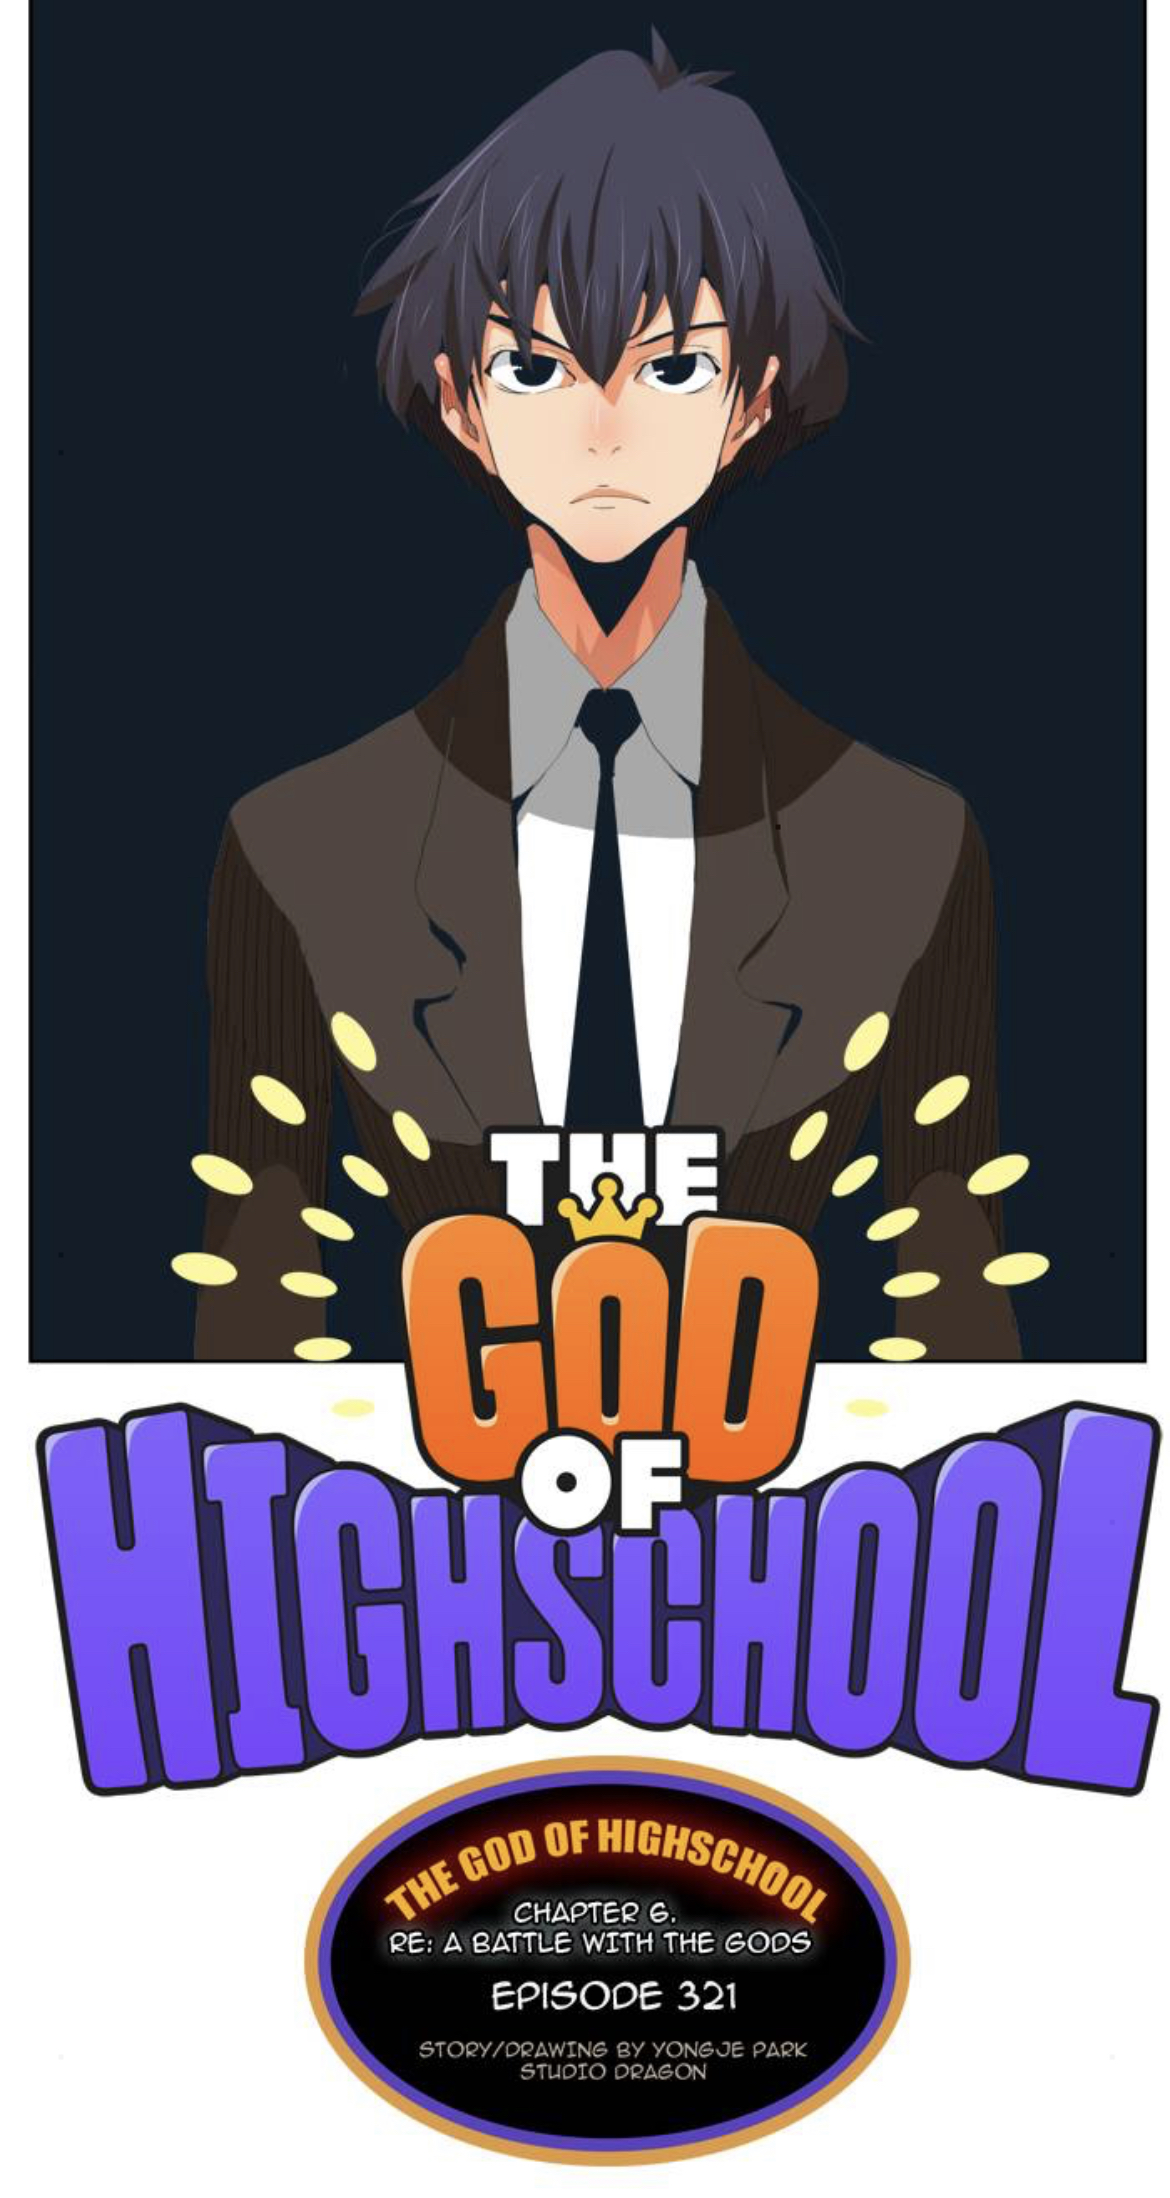 The God of High School, Korean Webtoons Wiki